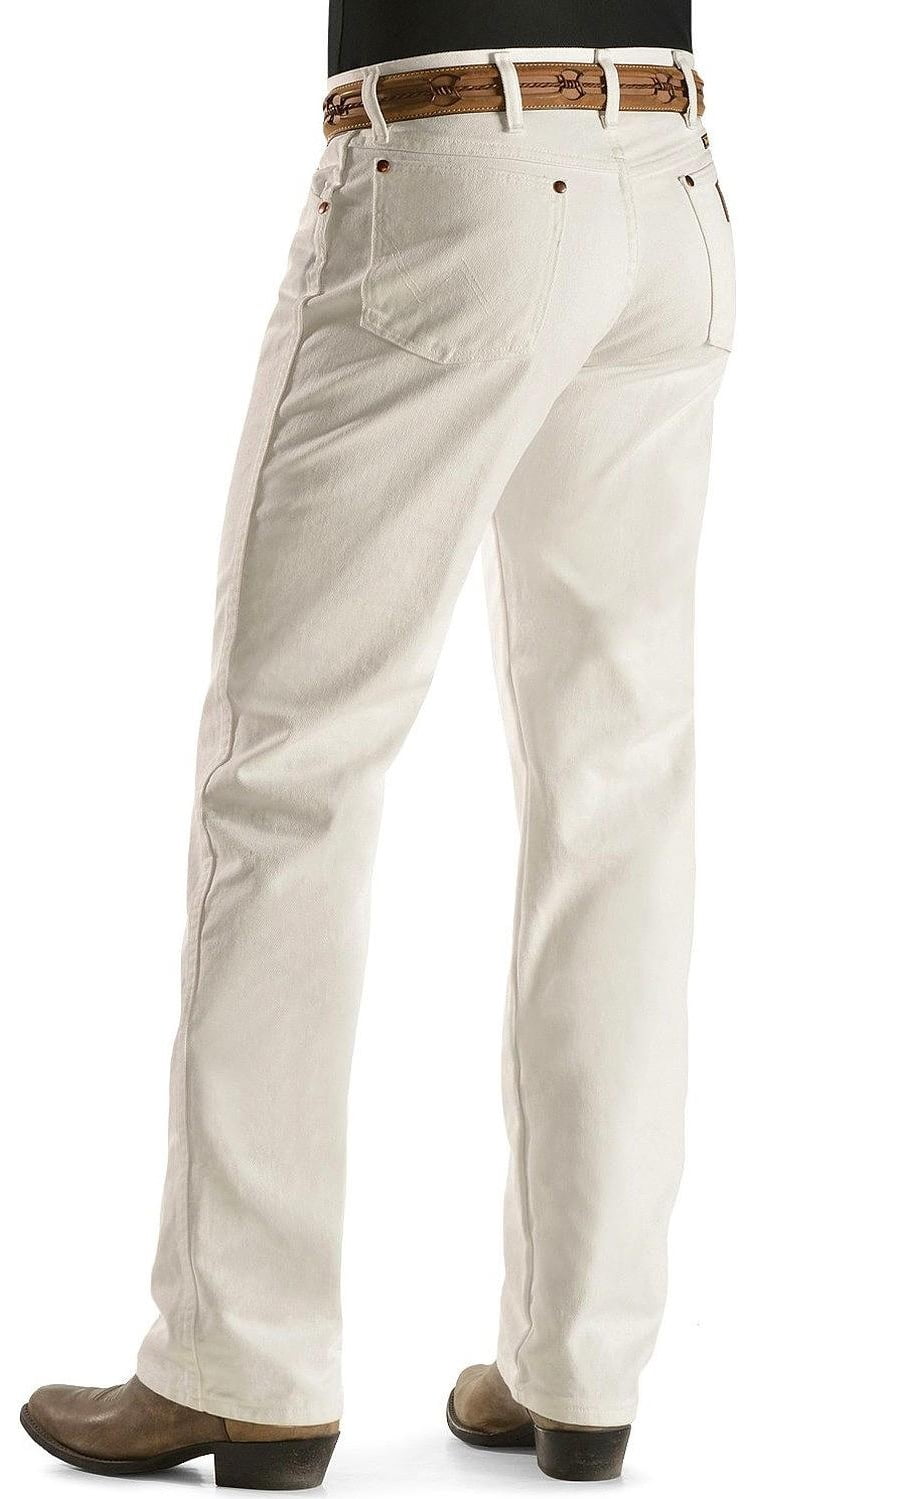 wrangler men's cowboy cut original fit jean, white, 34x36 - Walmart.com